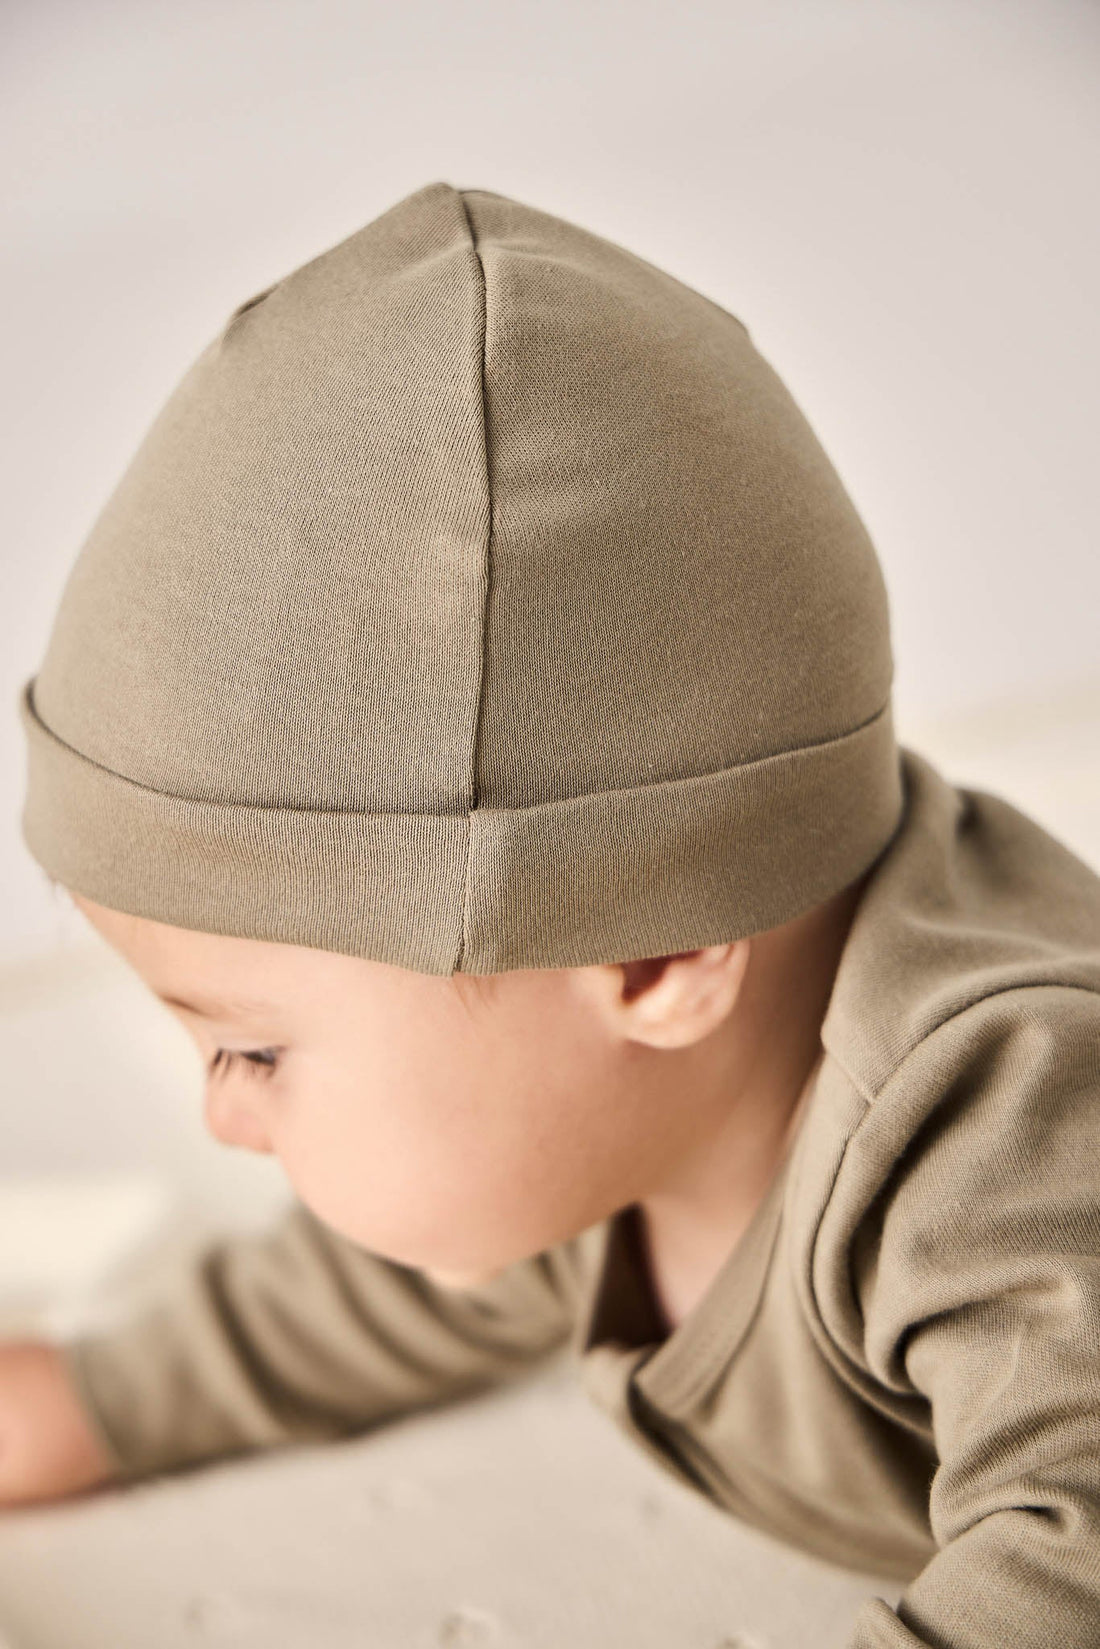 Pima Cotton Marley Beanie - Vert Childrens Hat from Jamie Kay USA